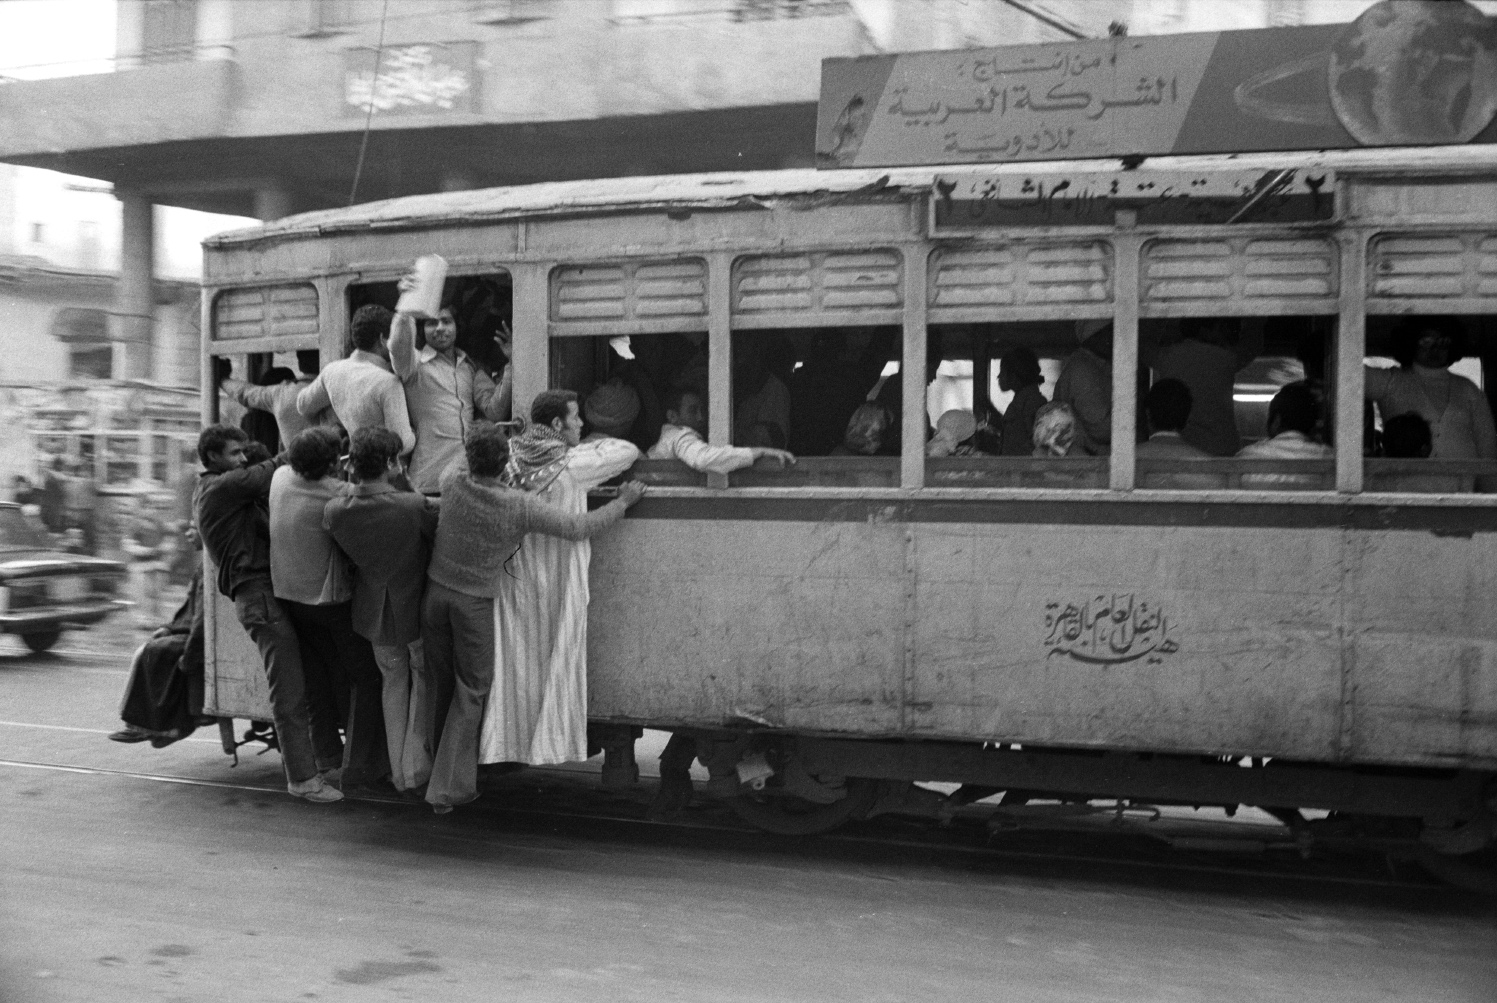 开罗 — Old photos